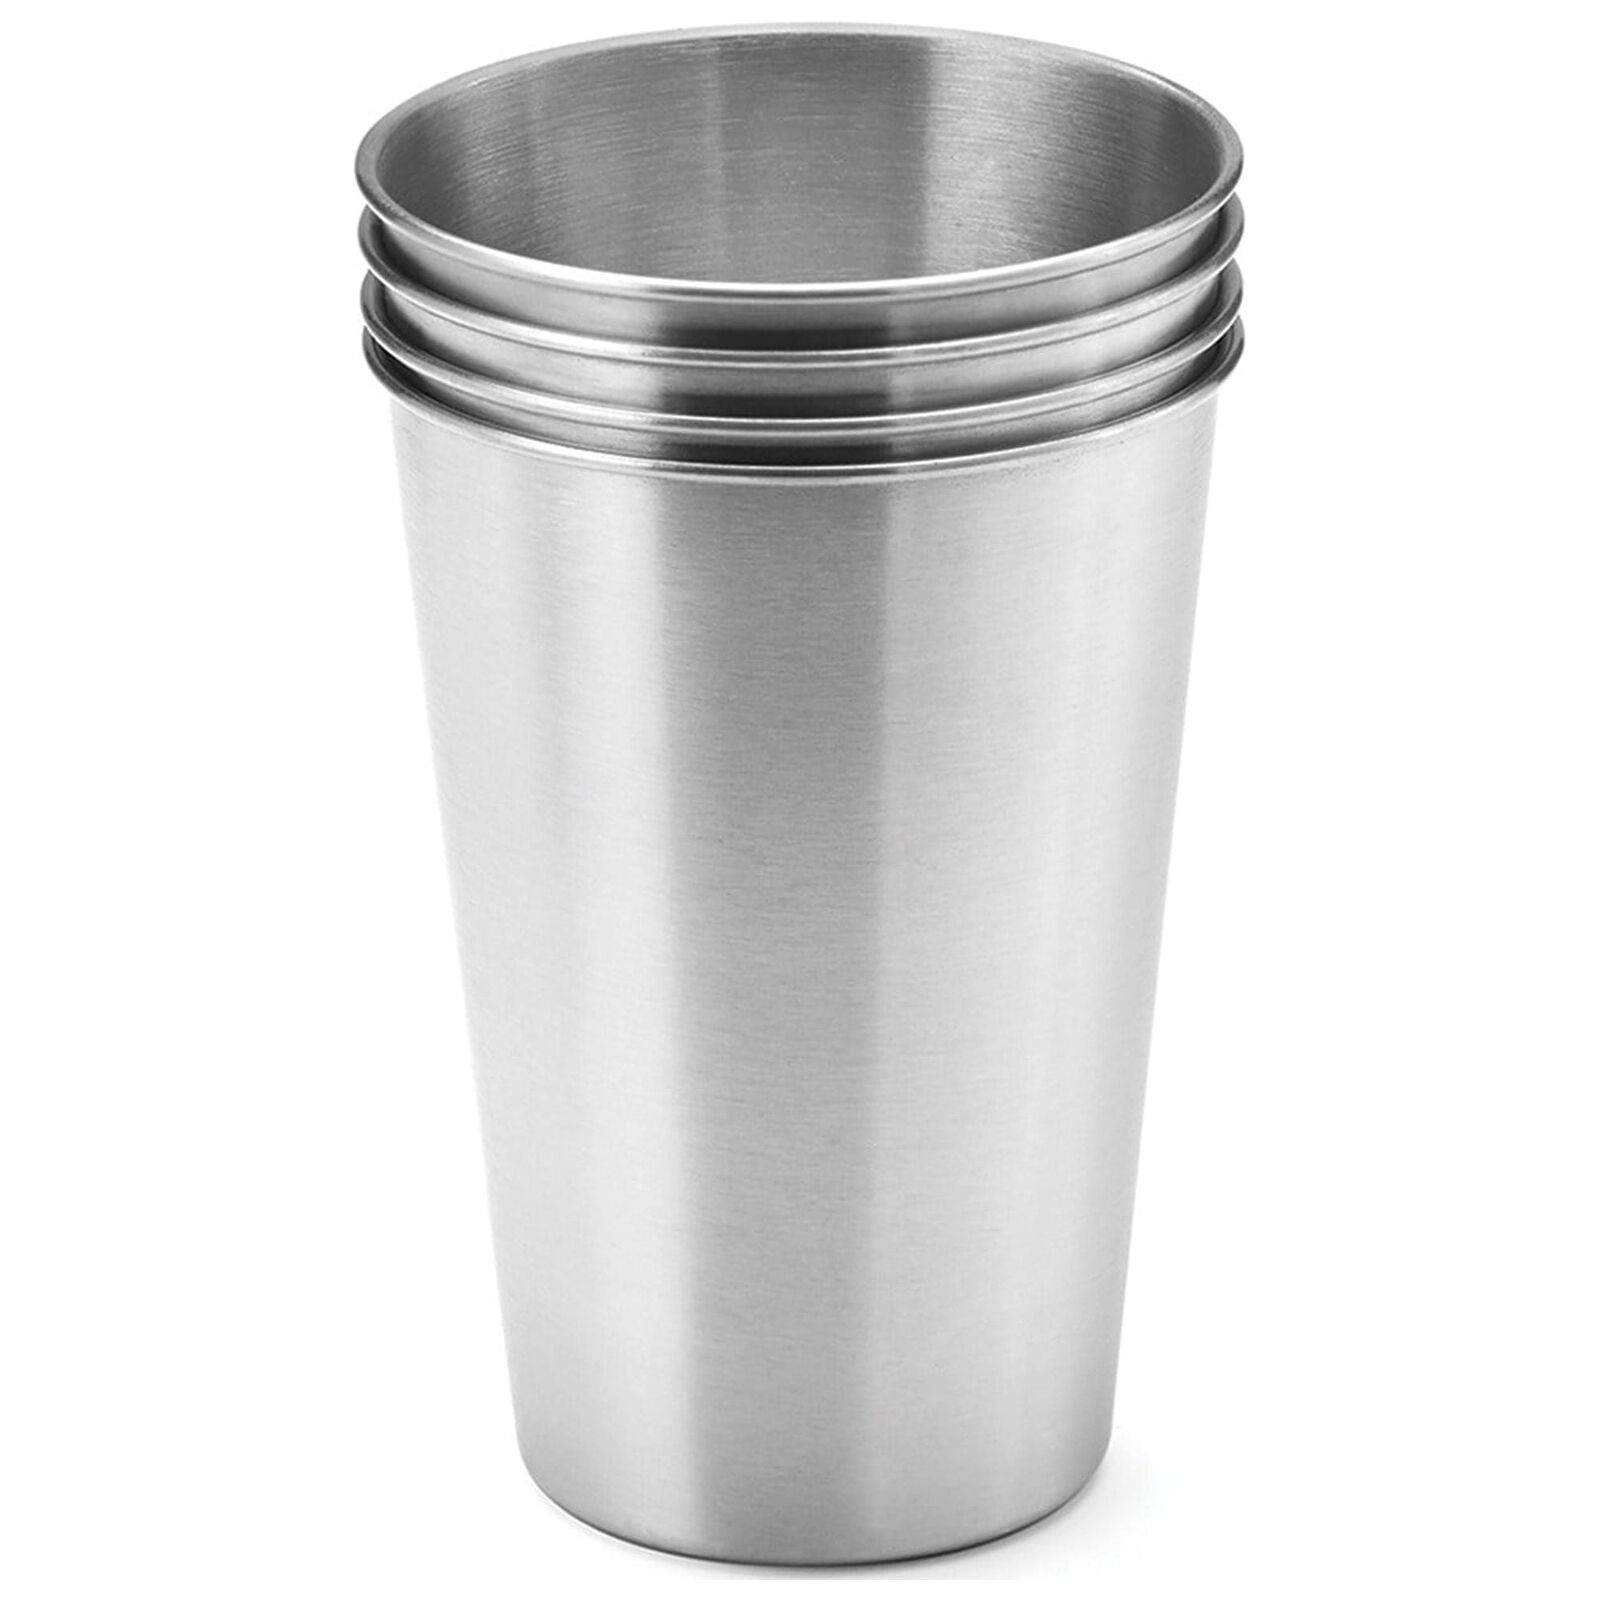 High quality stainless steel beer mug